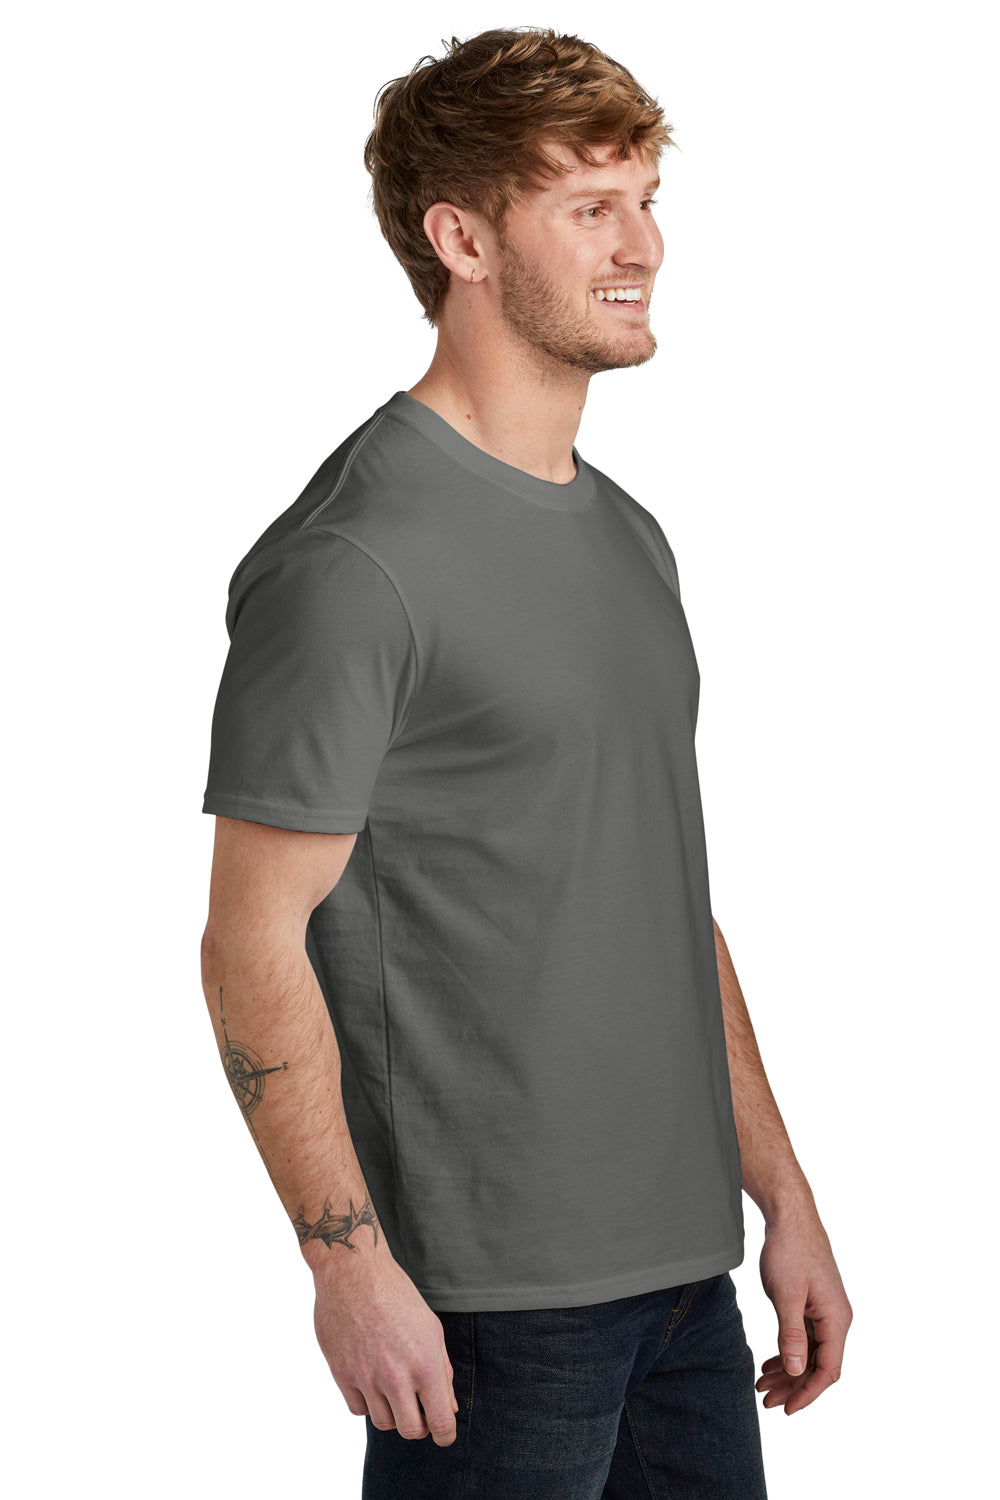 Volunteer Knitwear VL45 Daily Short Sleeve Crewneck T-Shirt Steel Grey Side